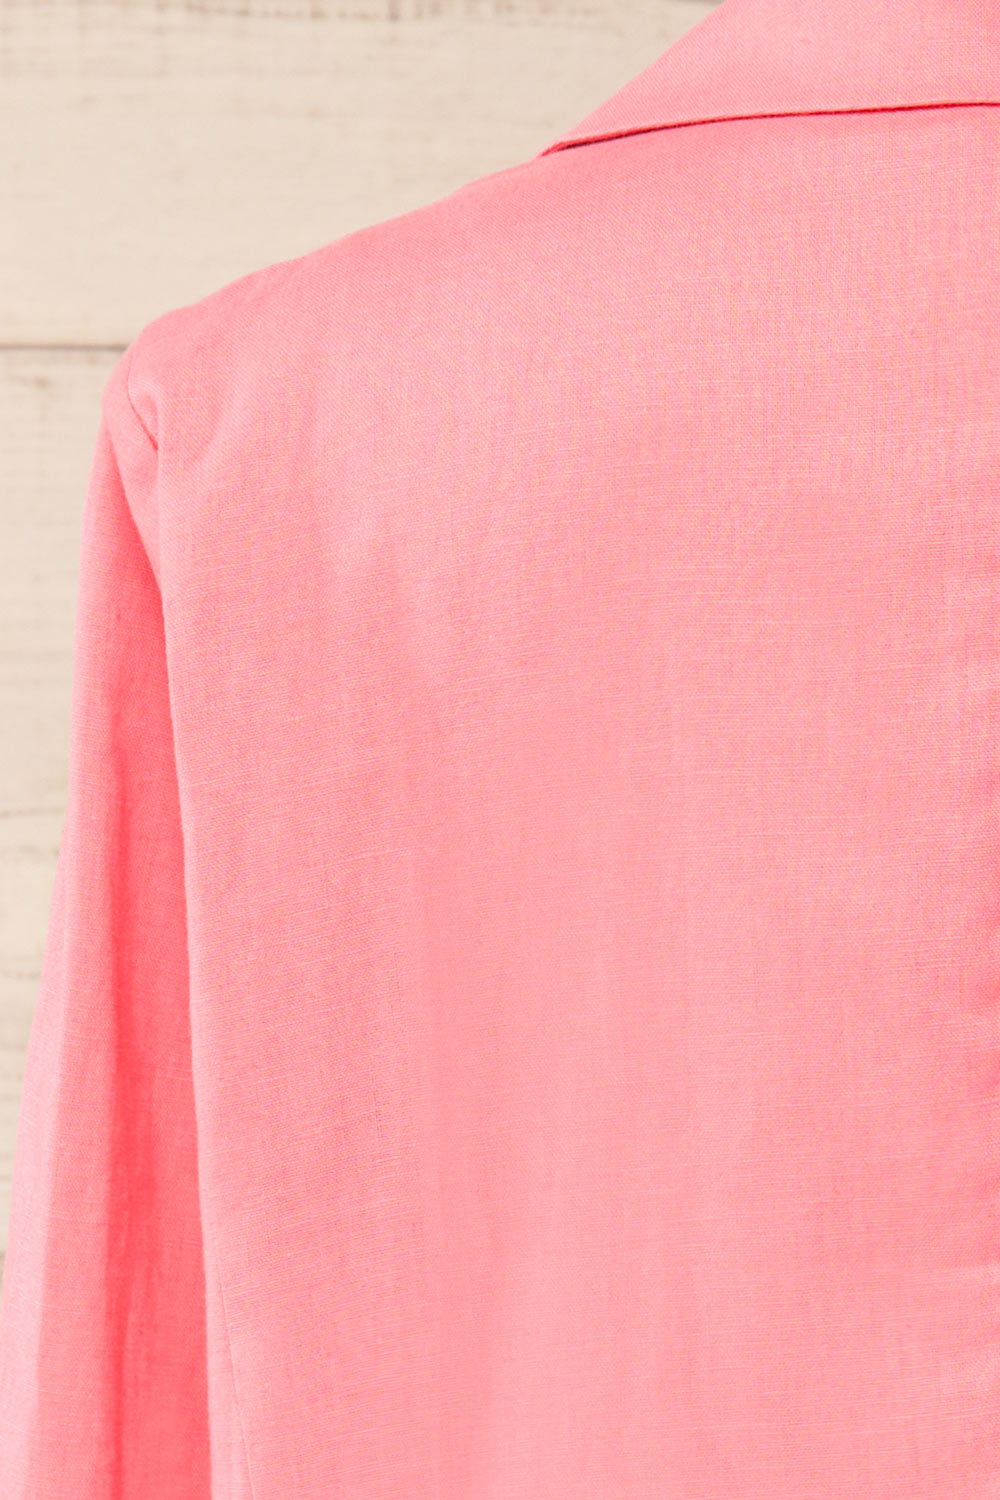 Sucunduri Pink Light Linen Blazer | La petite garçonne back 